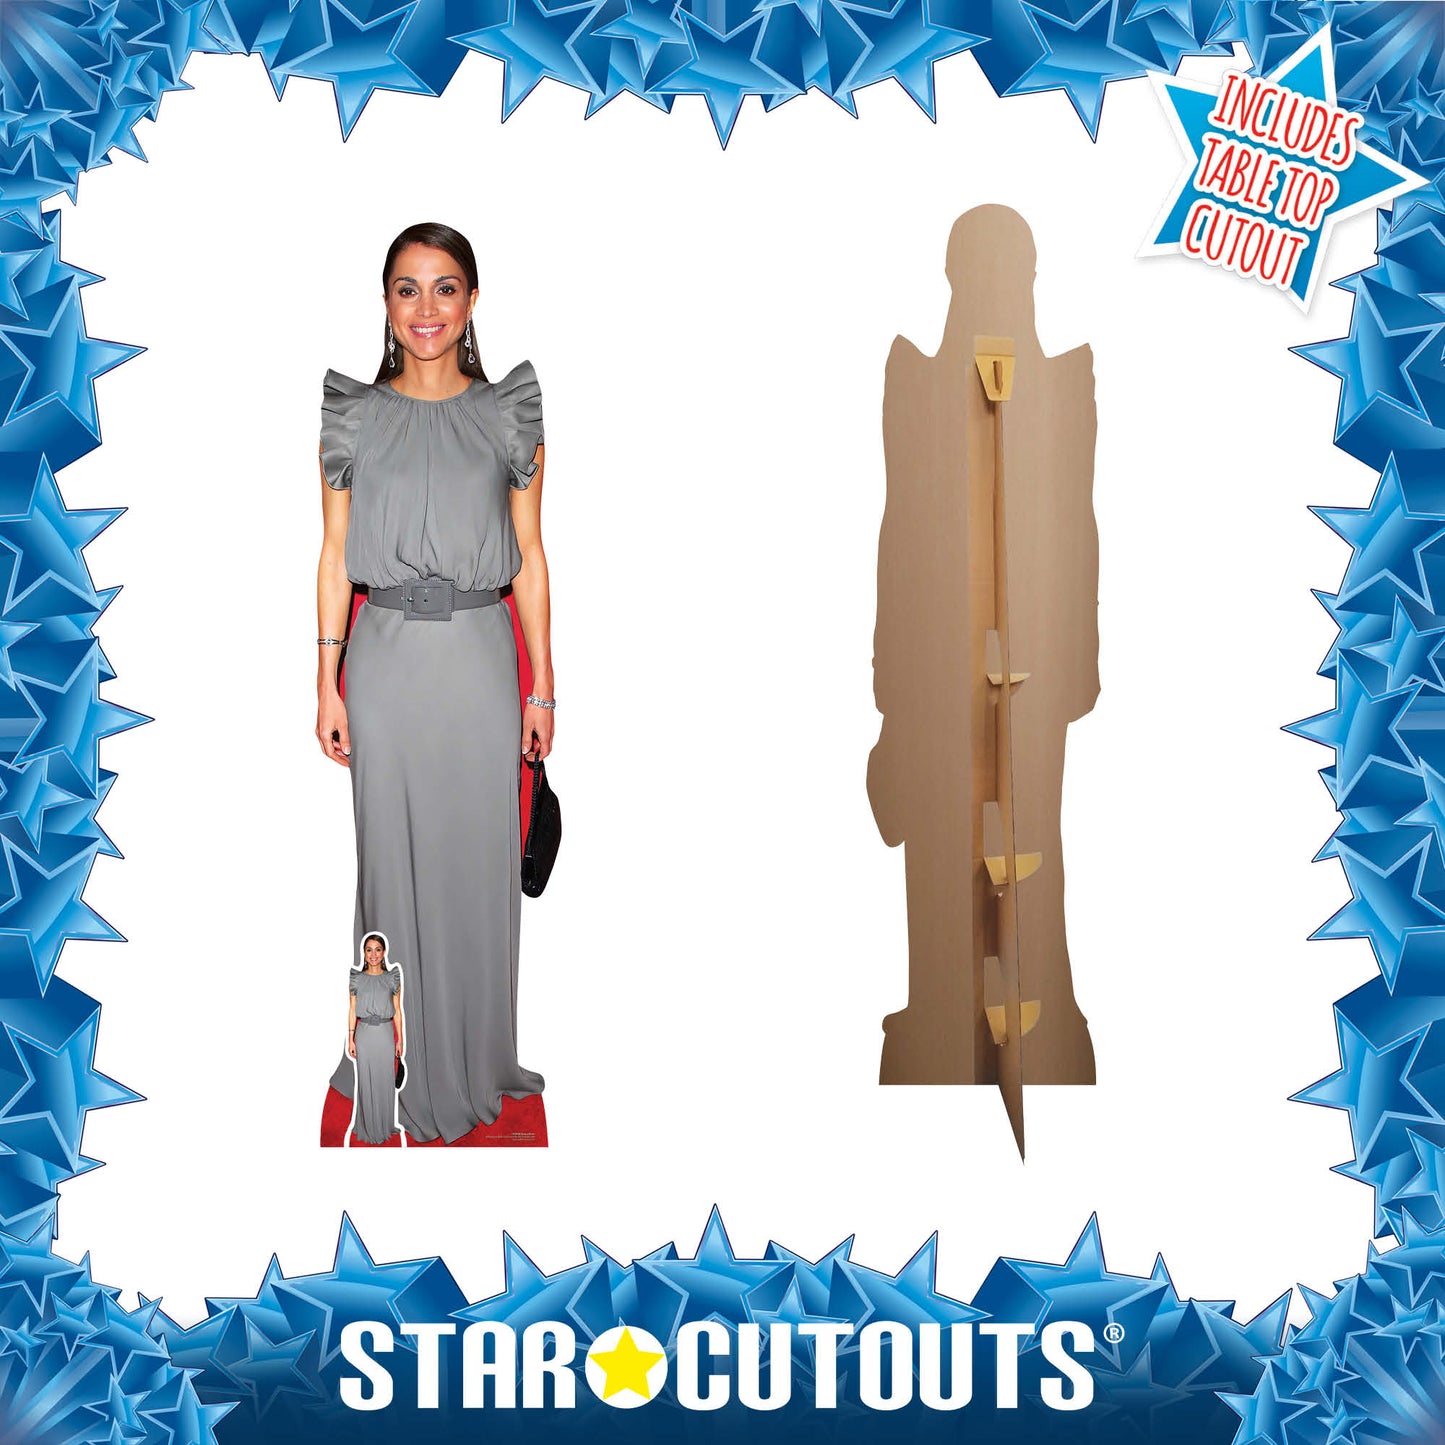 SC4034 Queen Rania of Jordan (Grey Dress) Cardboard Cut Out Height 171cm